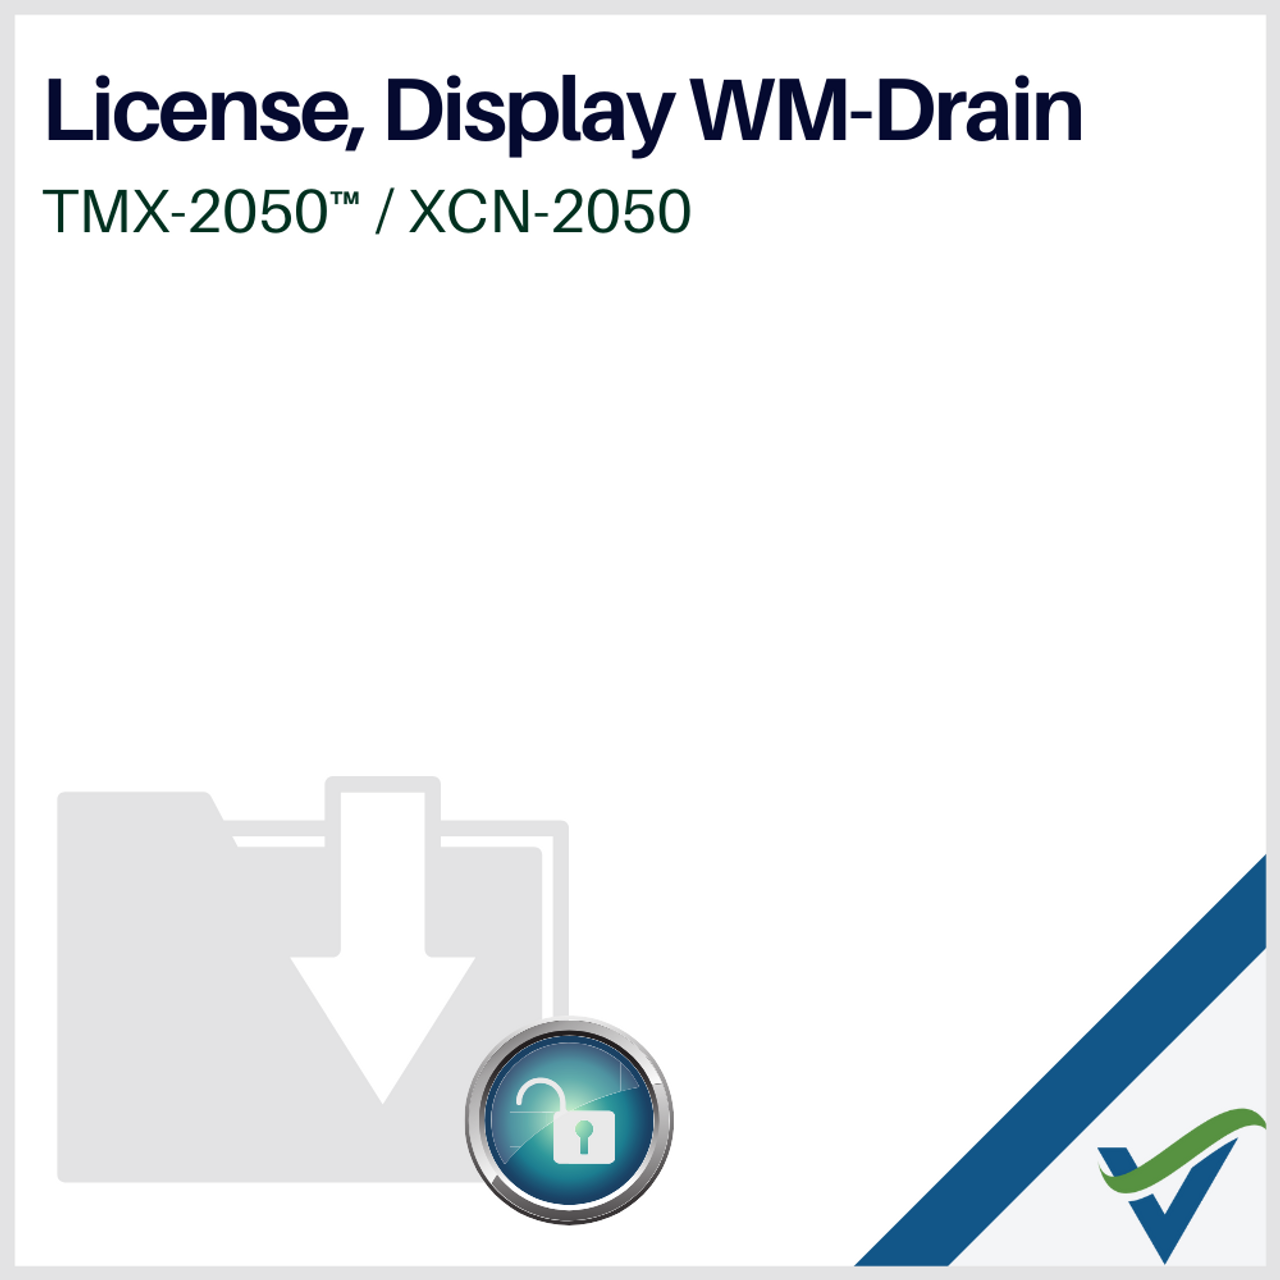 License, Display WM-Drain (TMX-2050)